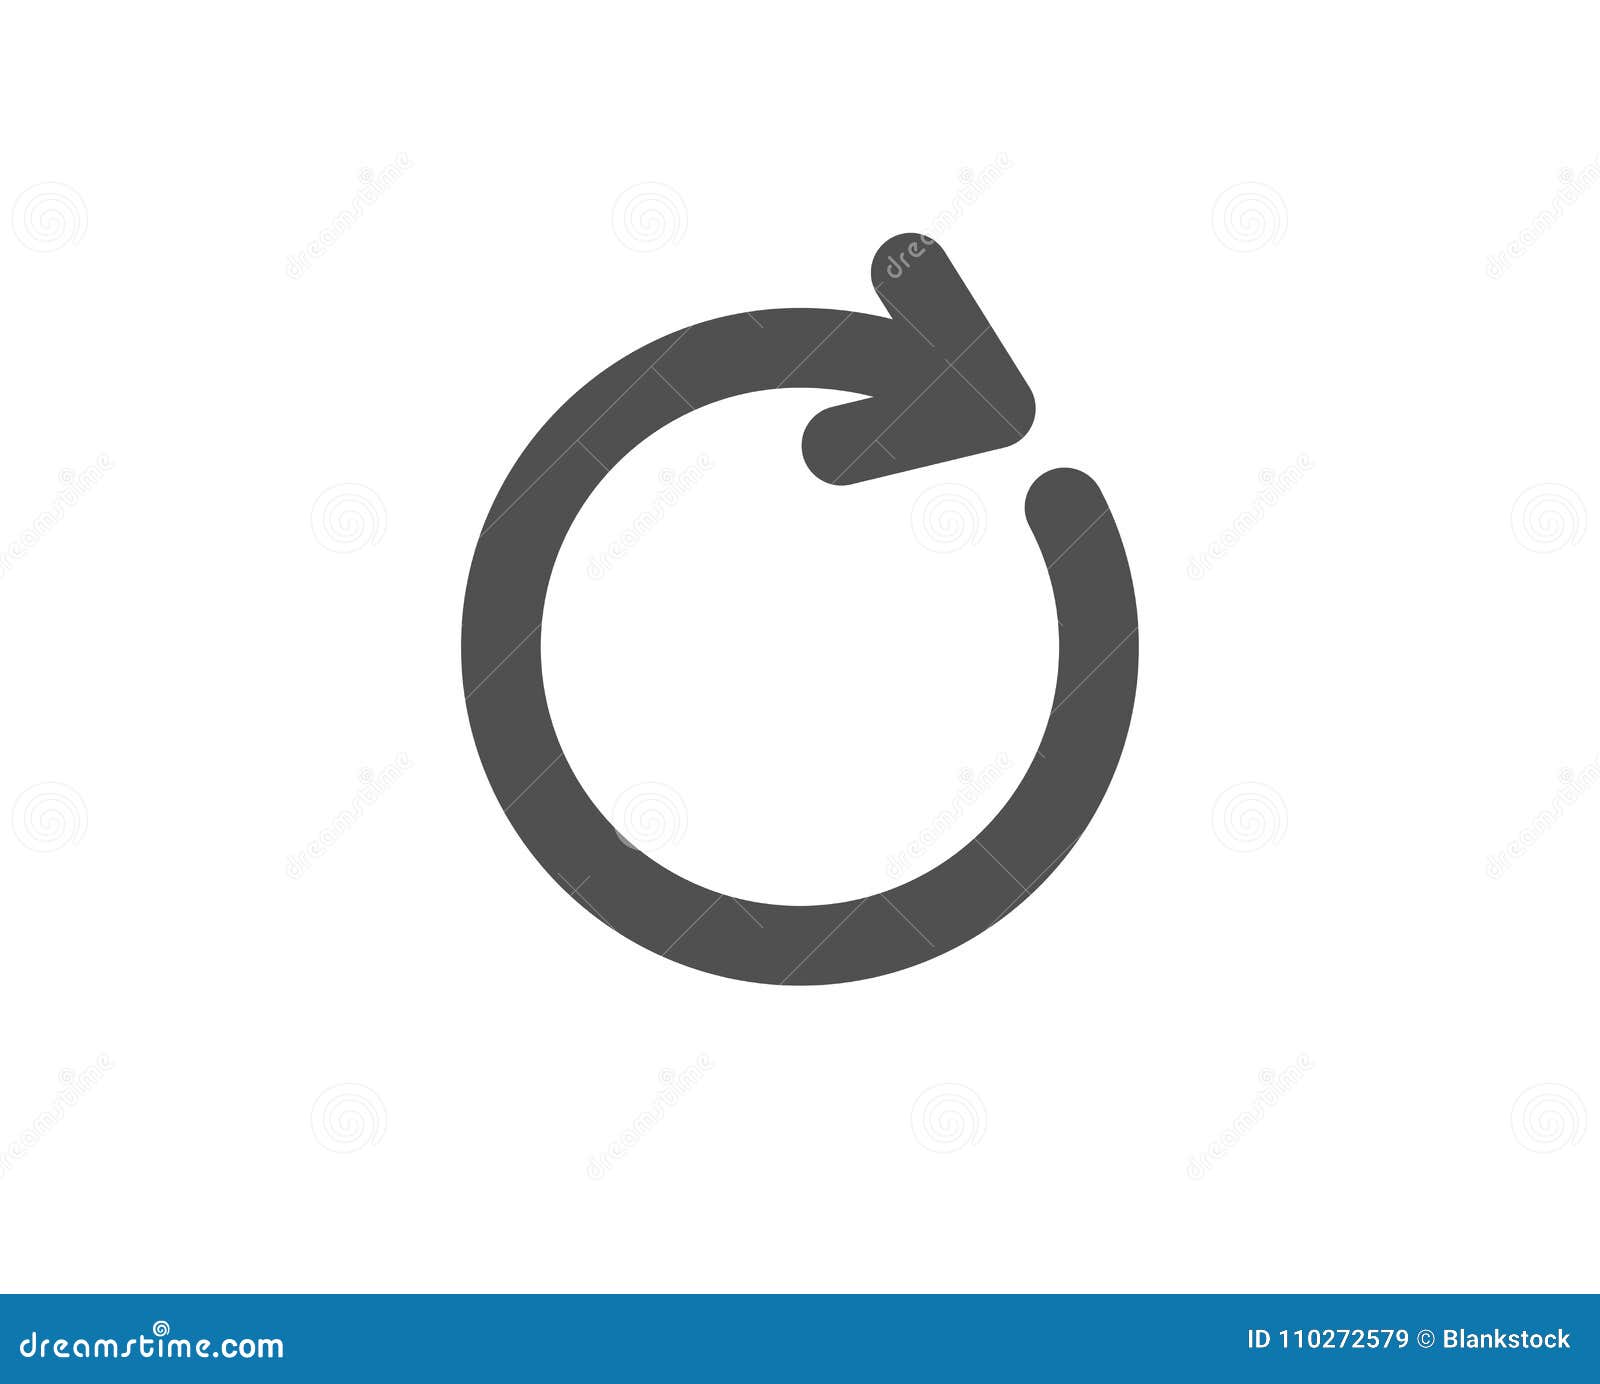 refresh simple icon. rotation arrow sign.